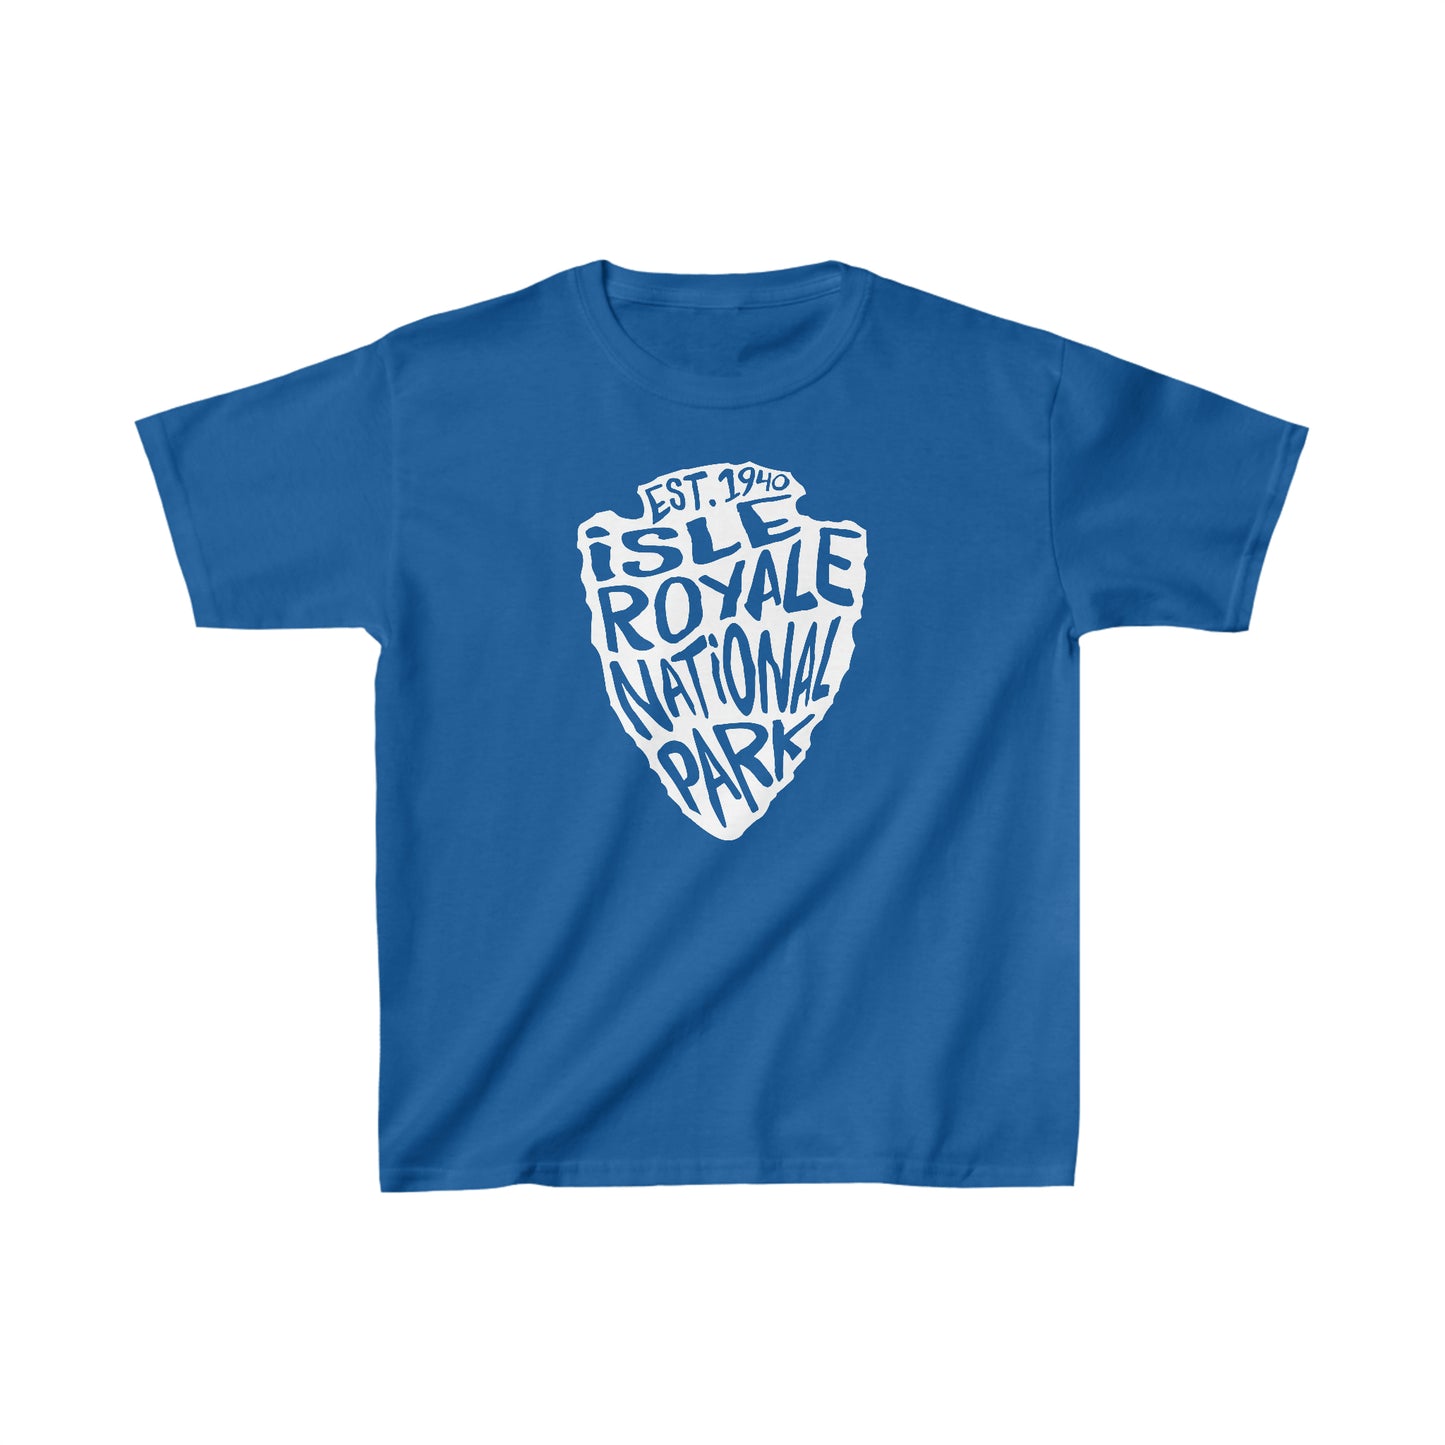 Isle Royale National Park Child T-Shirt - Arrowhead Design